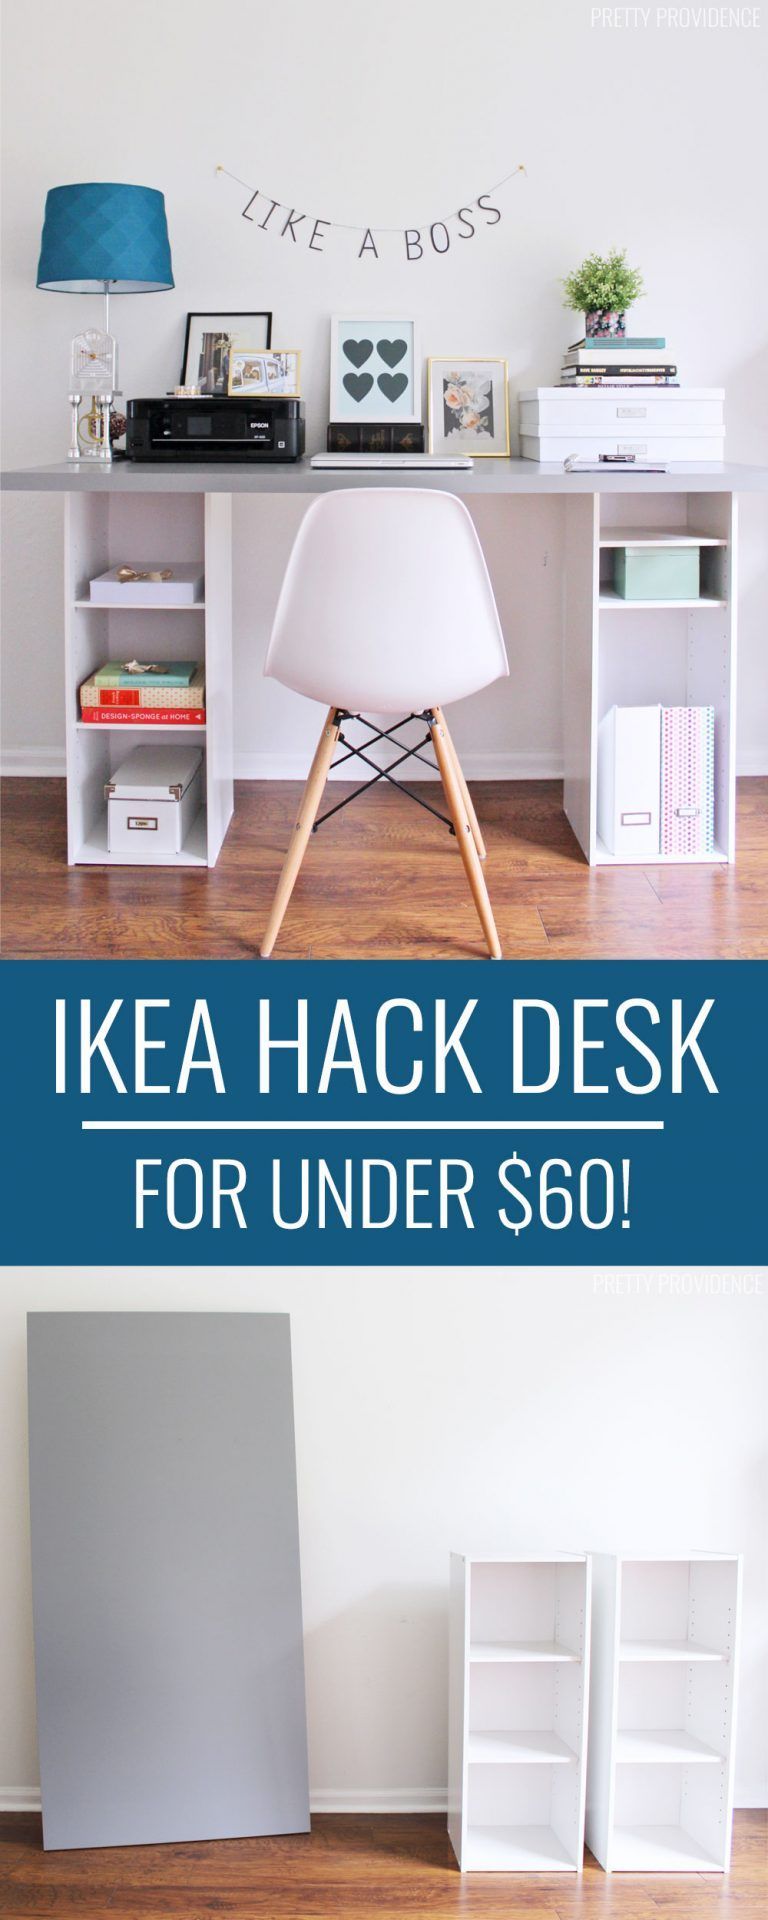 IKEA HACK Desk with Storage Shelves - Pretty Providence - IKEA HACK Desk with Storage Shelves - Pretty Providence -   18 diy Desk hack ideas